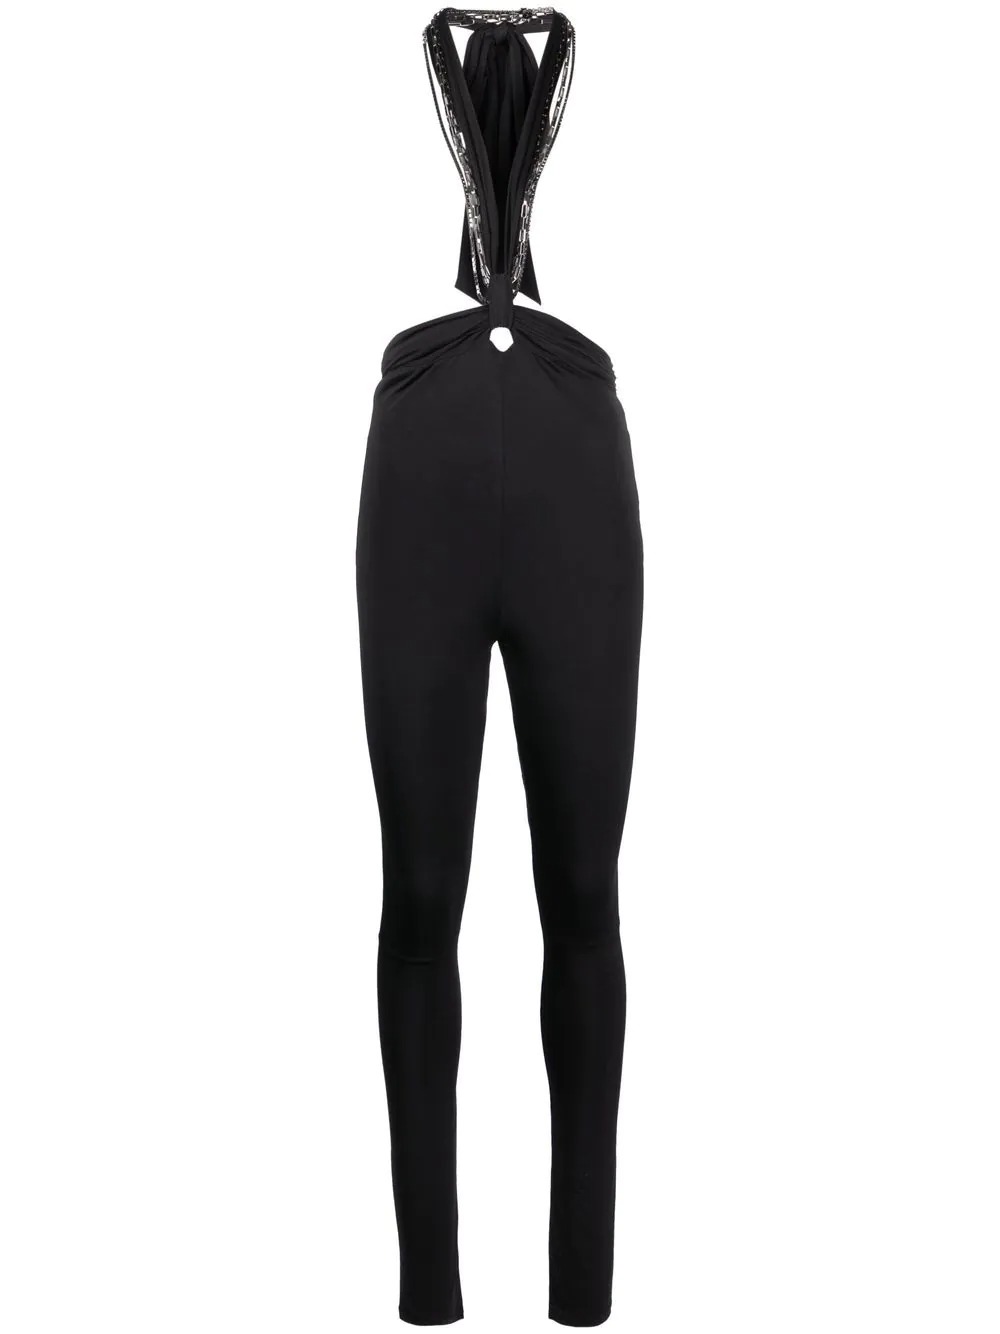 Buy Jockey Ruby Printed Yoga Pants - AA01 for Women Online @ Tata CLiQ